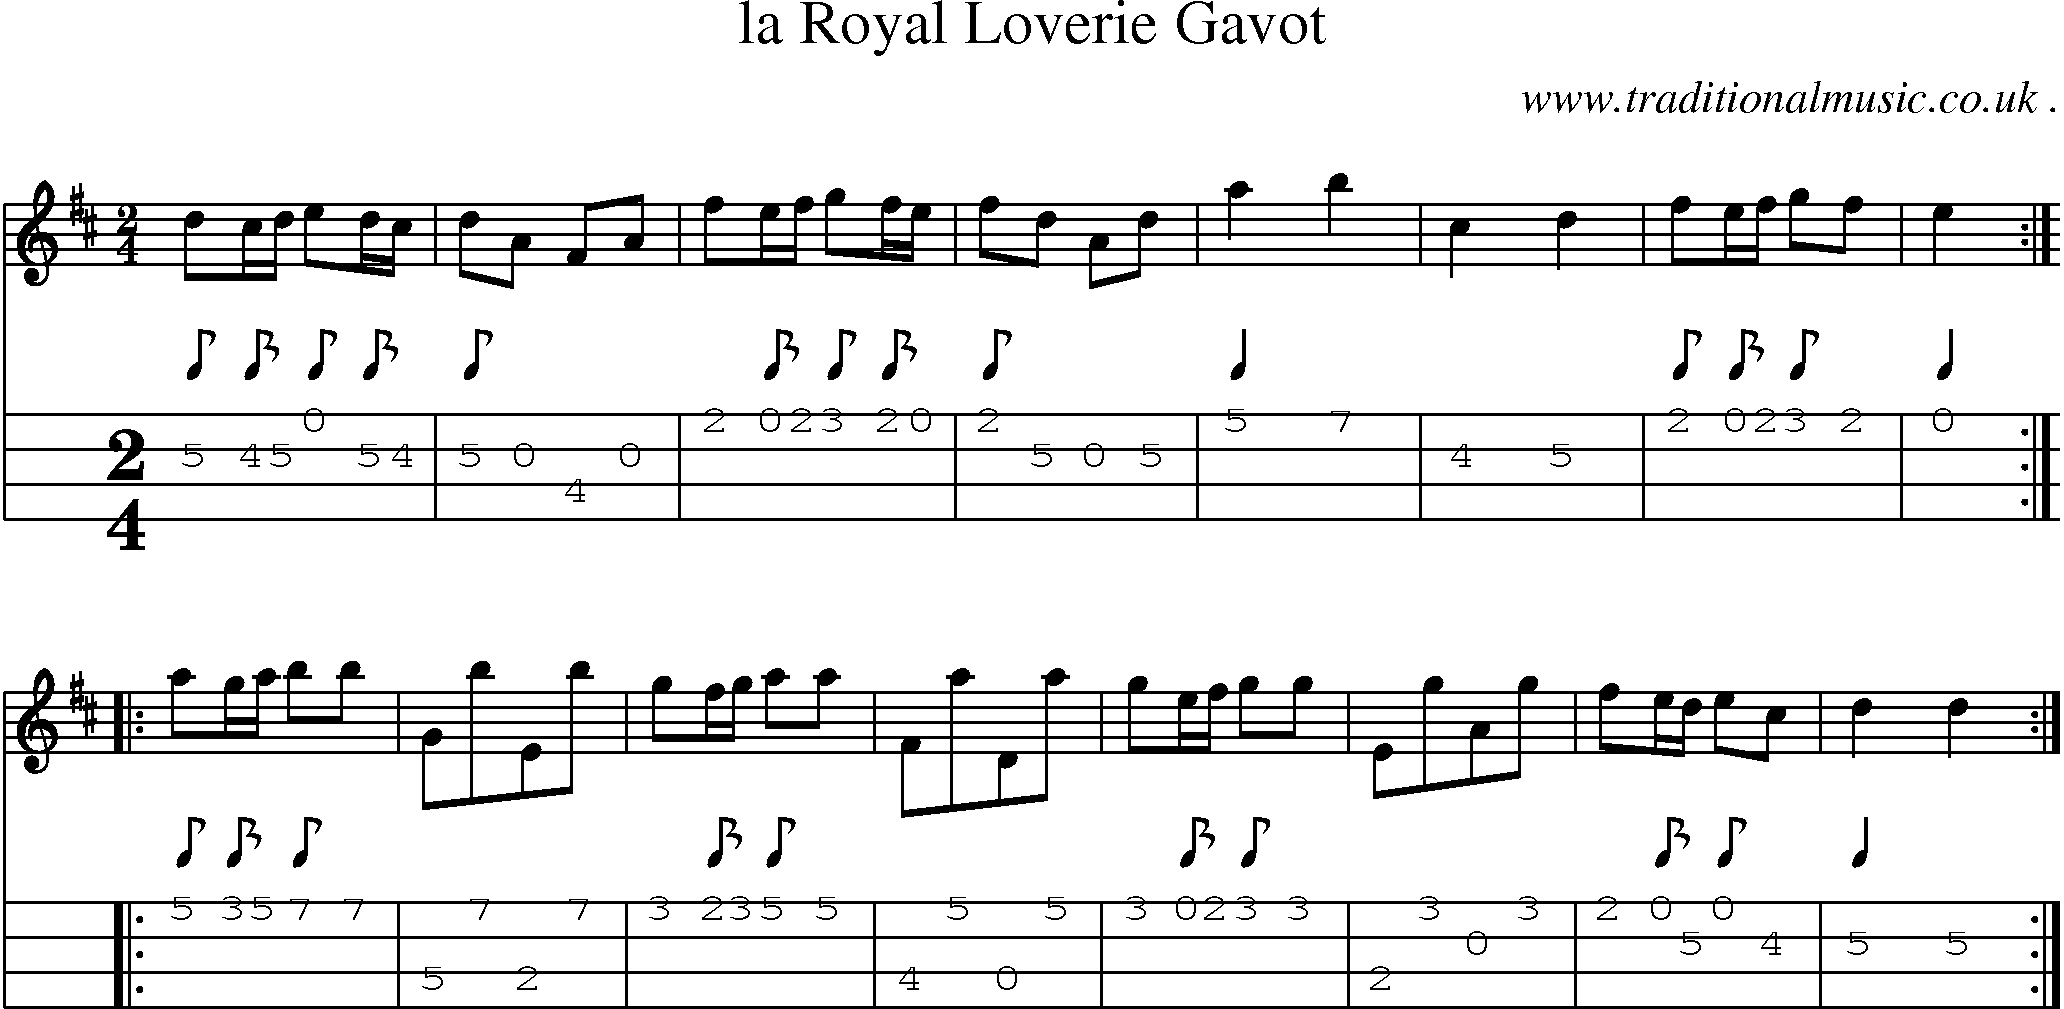 Sheet-Music and Mandolin Tabs for La Royal Loverie Gavot